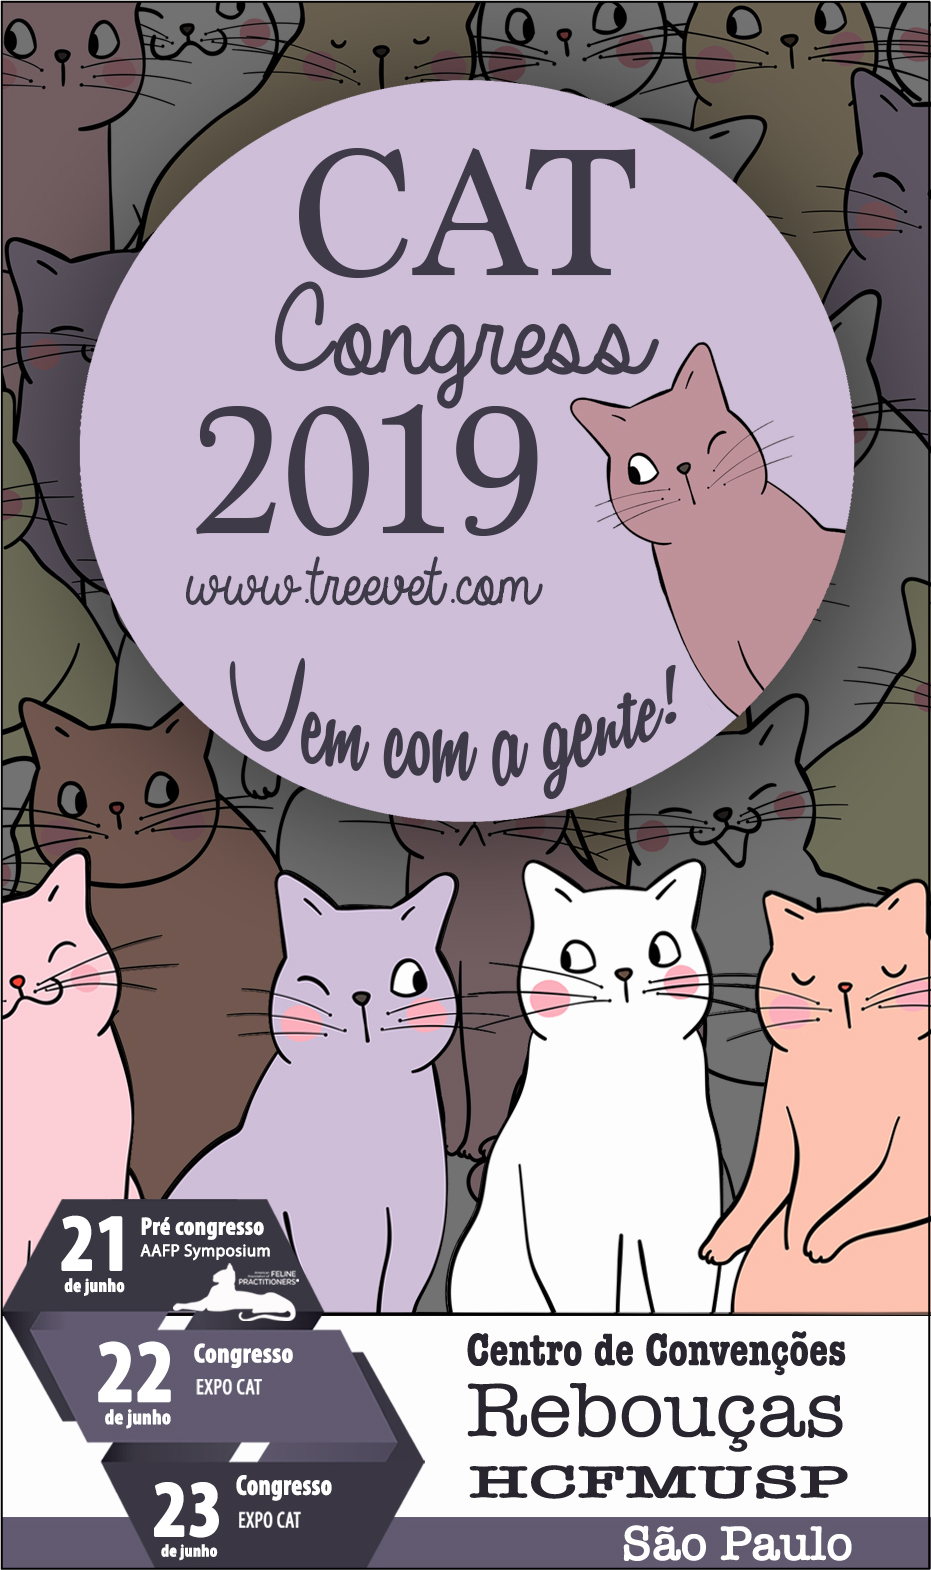 CAT Congress SP 2019